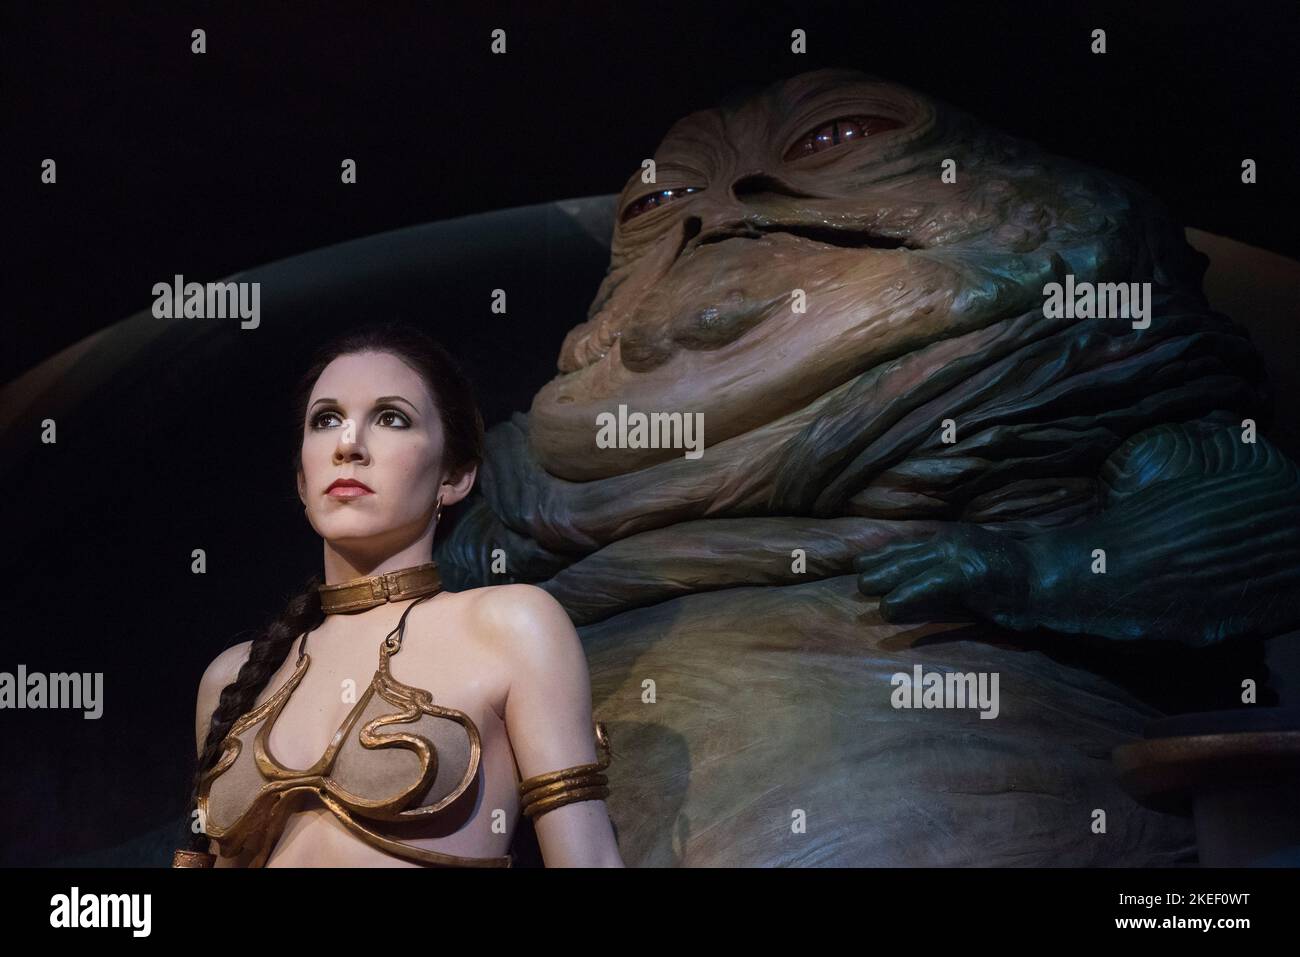 Princess Leia and Jabba wax figure at Madame Tussaud's Stock Photo